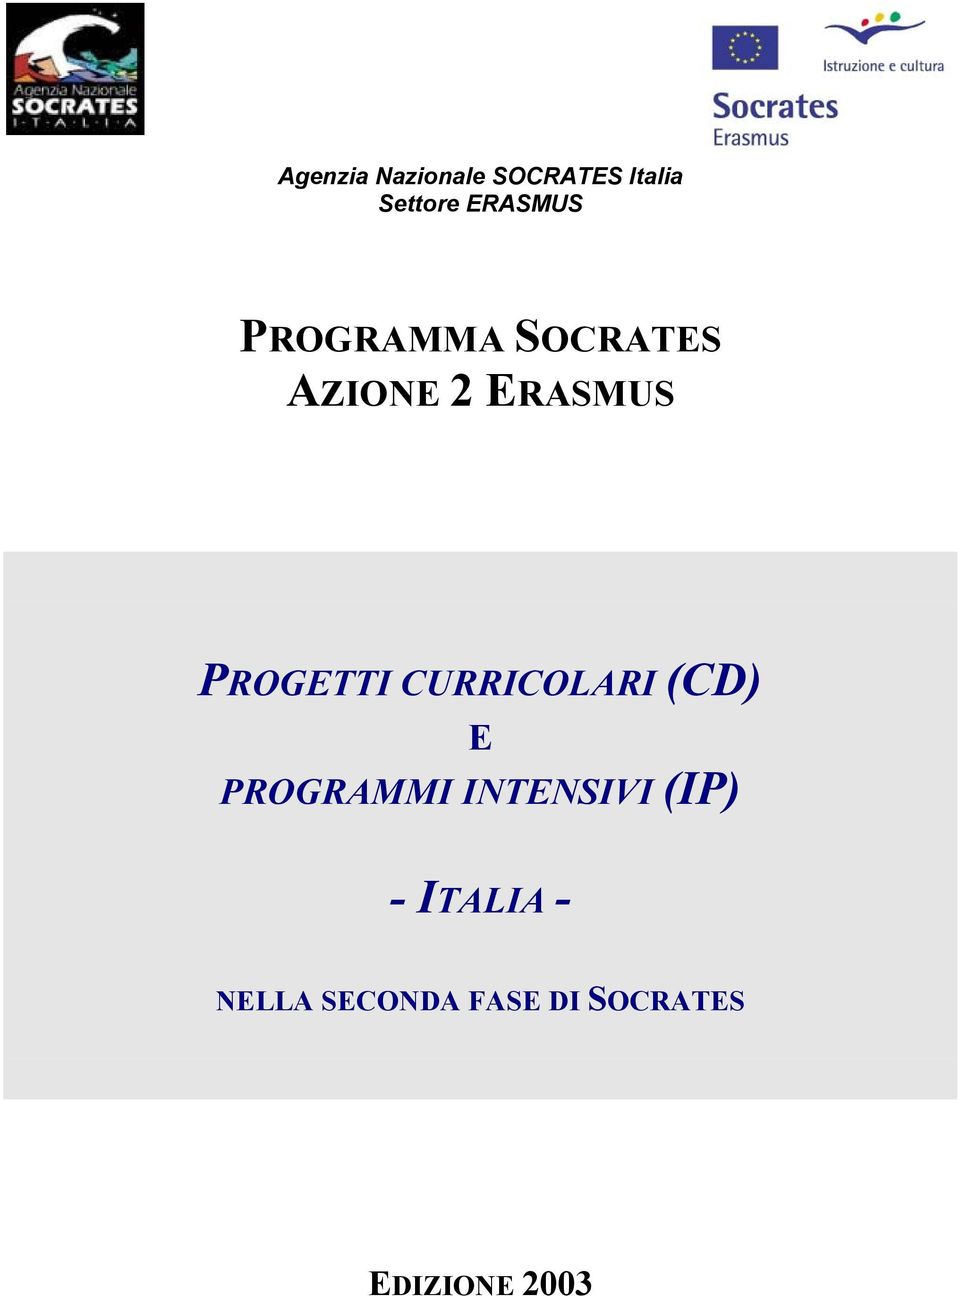 PROGRAMMI INTENSIVI (IP) - ITALIA -